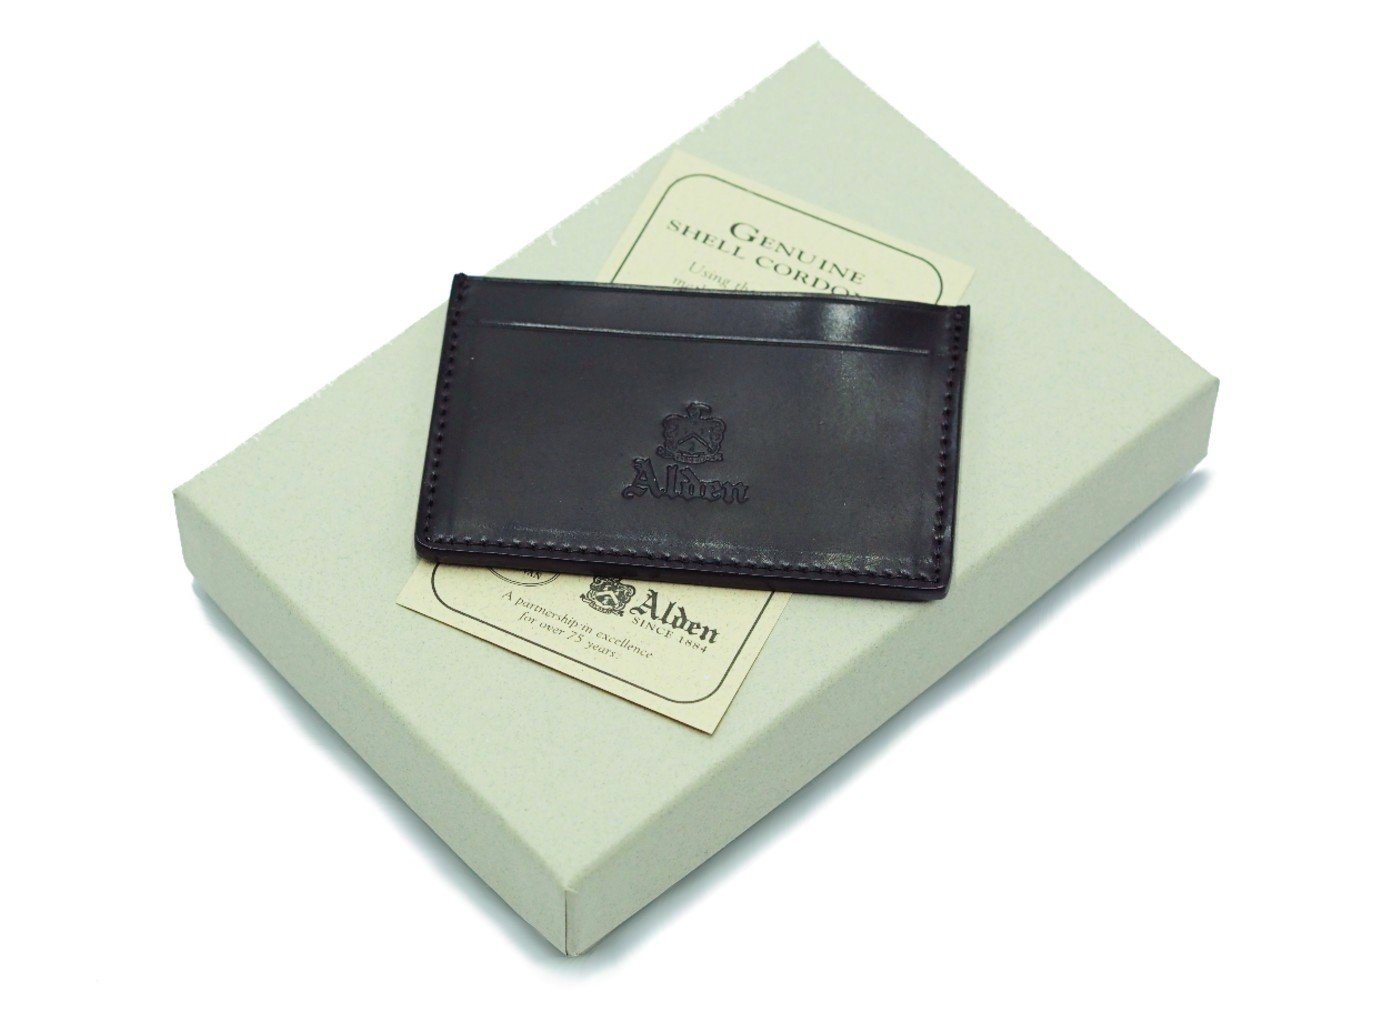 Alden slim credit card case in black shell cordovan on top of box